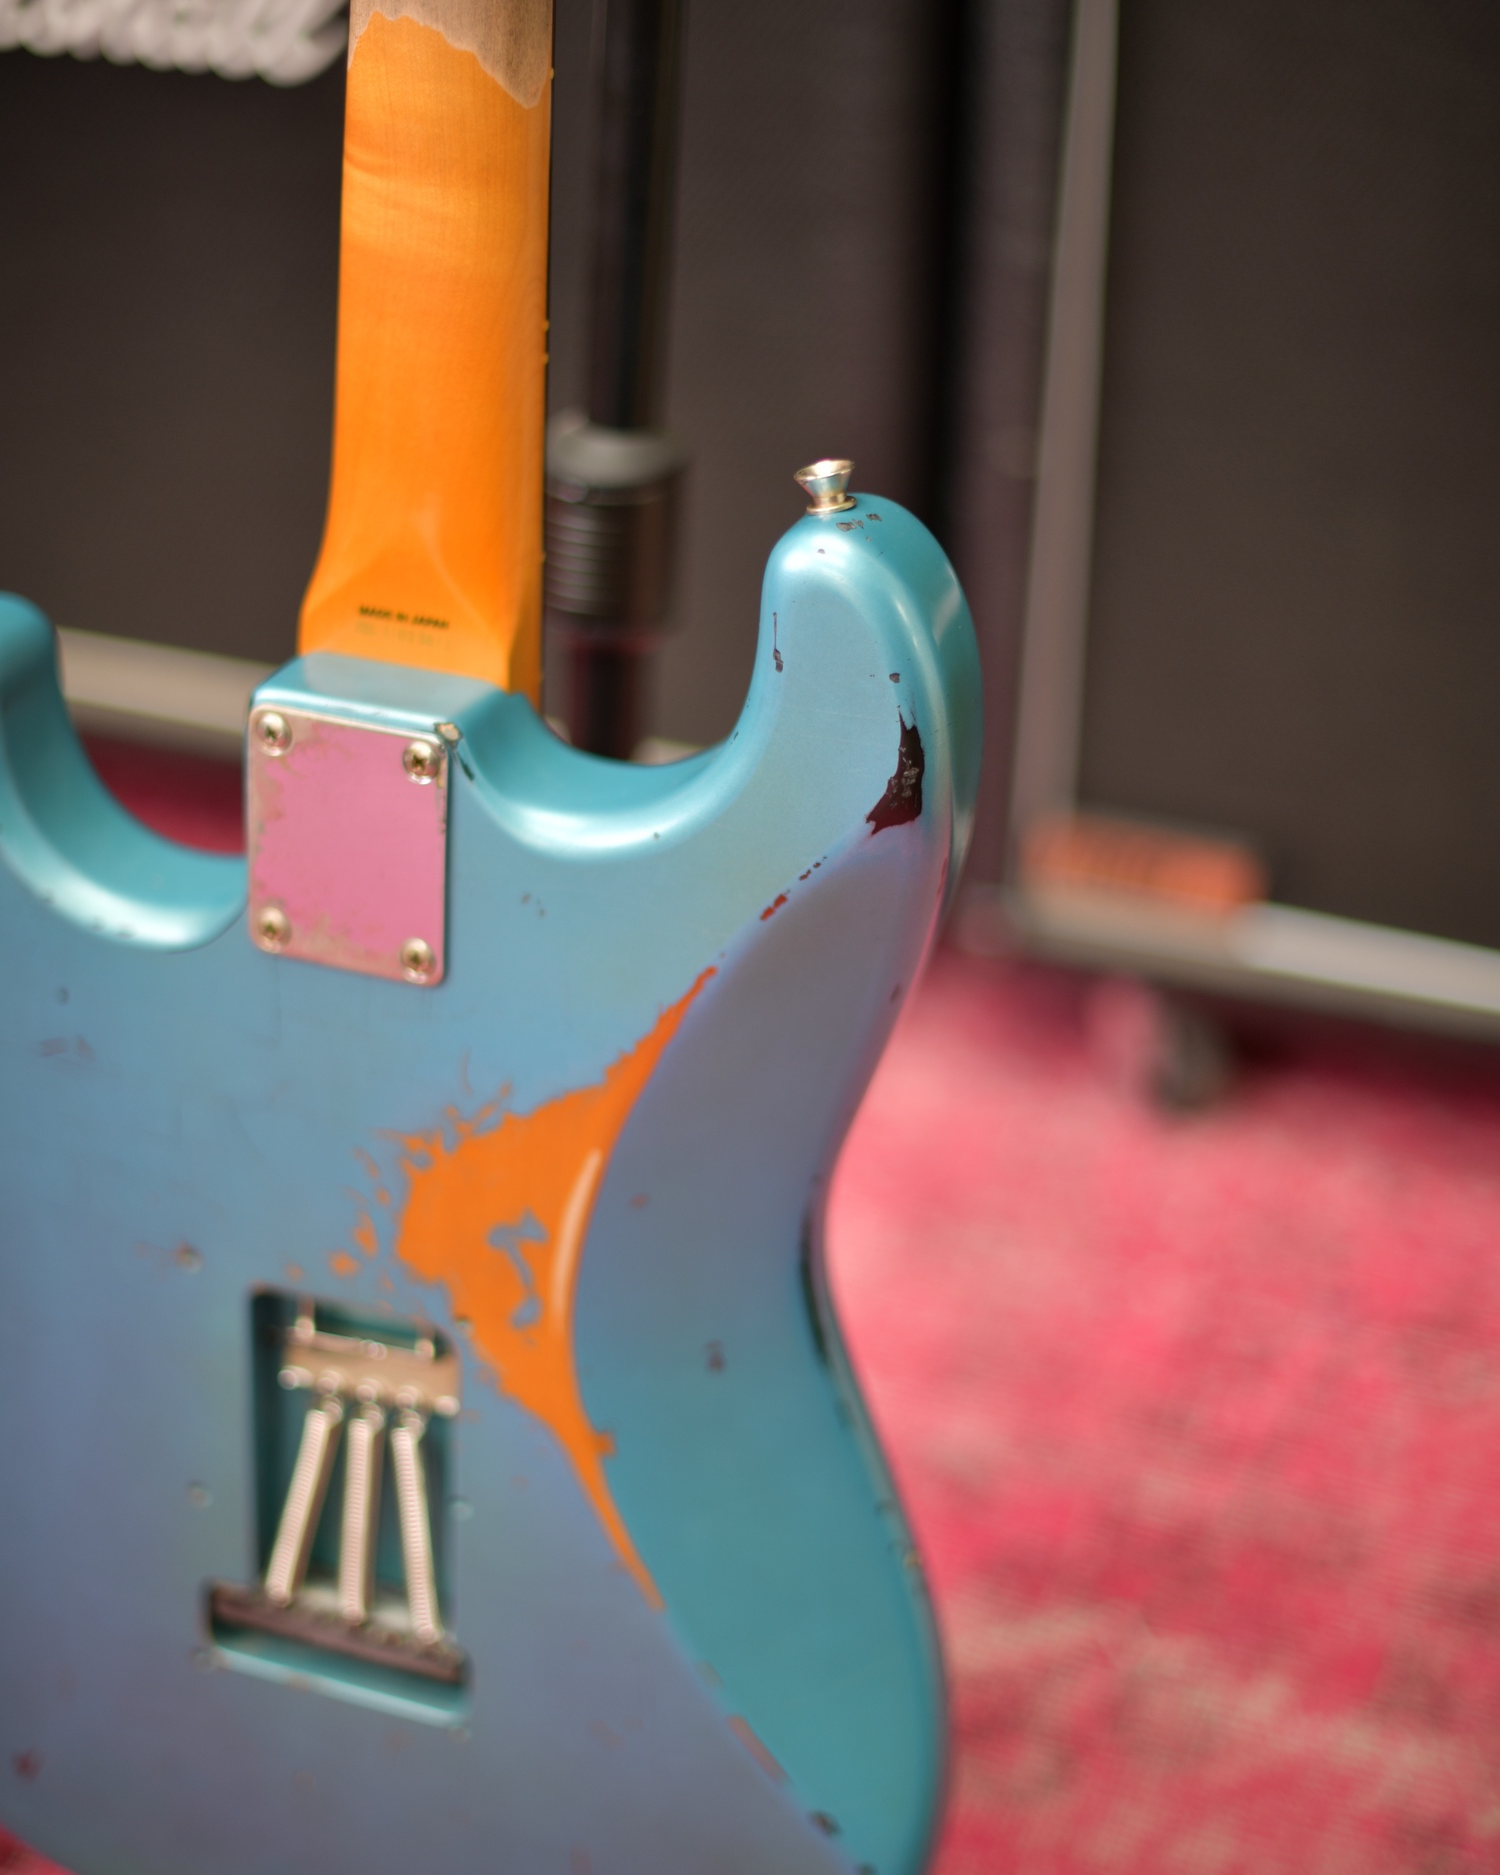 Fender Japan Stratocaster Faded Lake Placid Blue MIJ Fujigen 2010